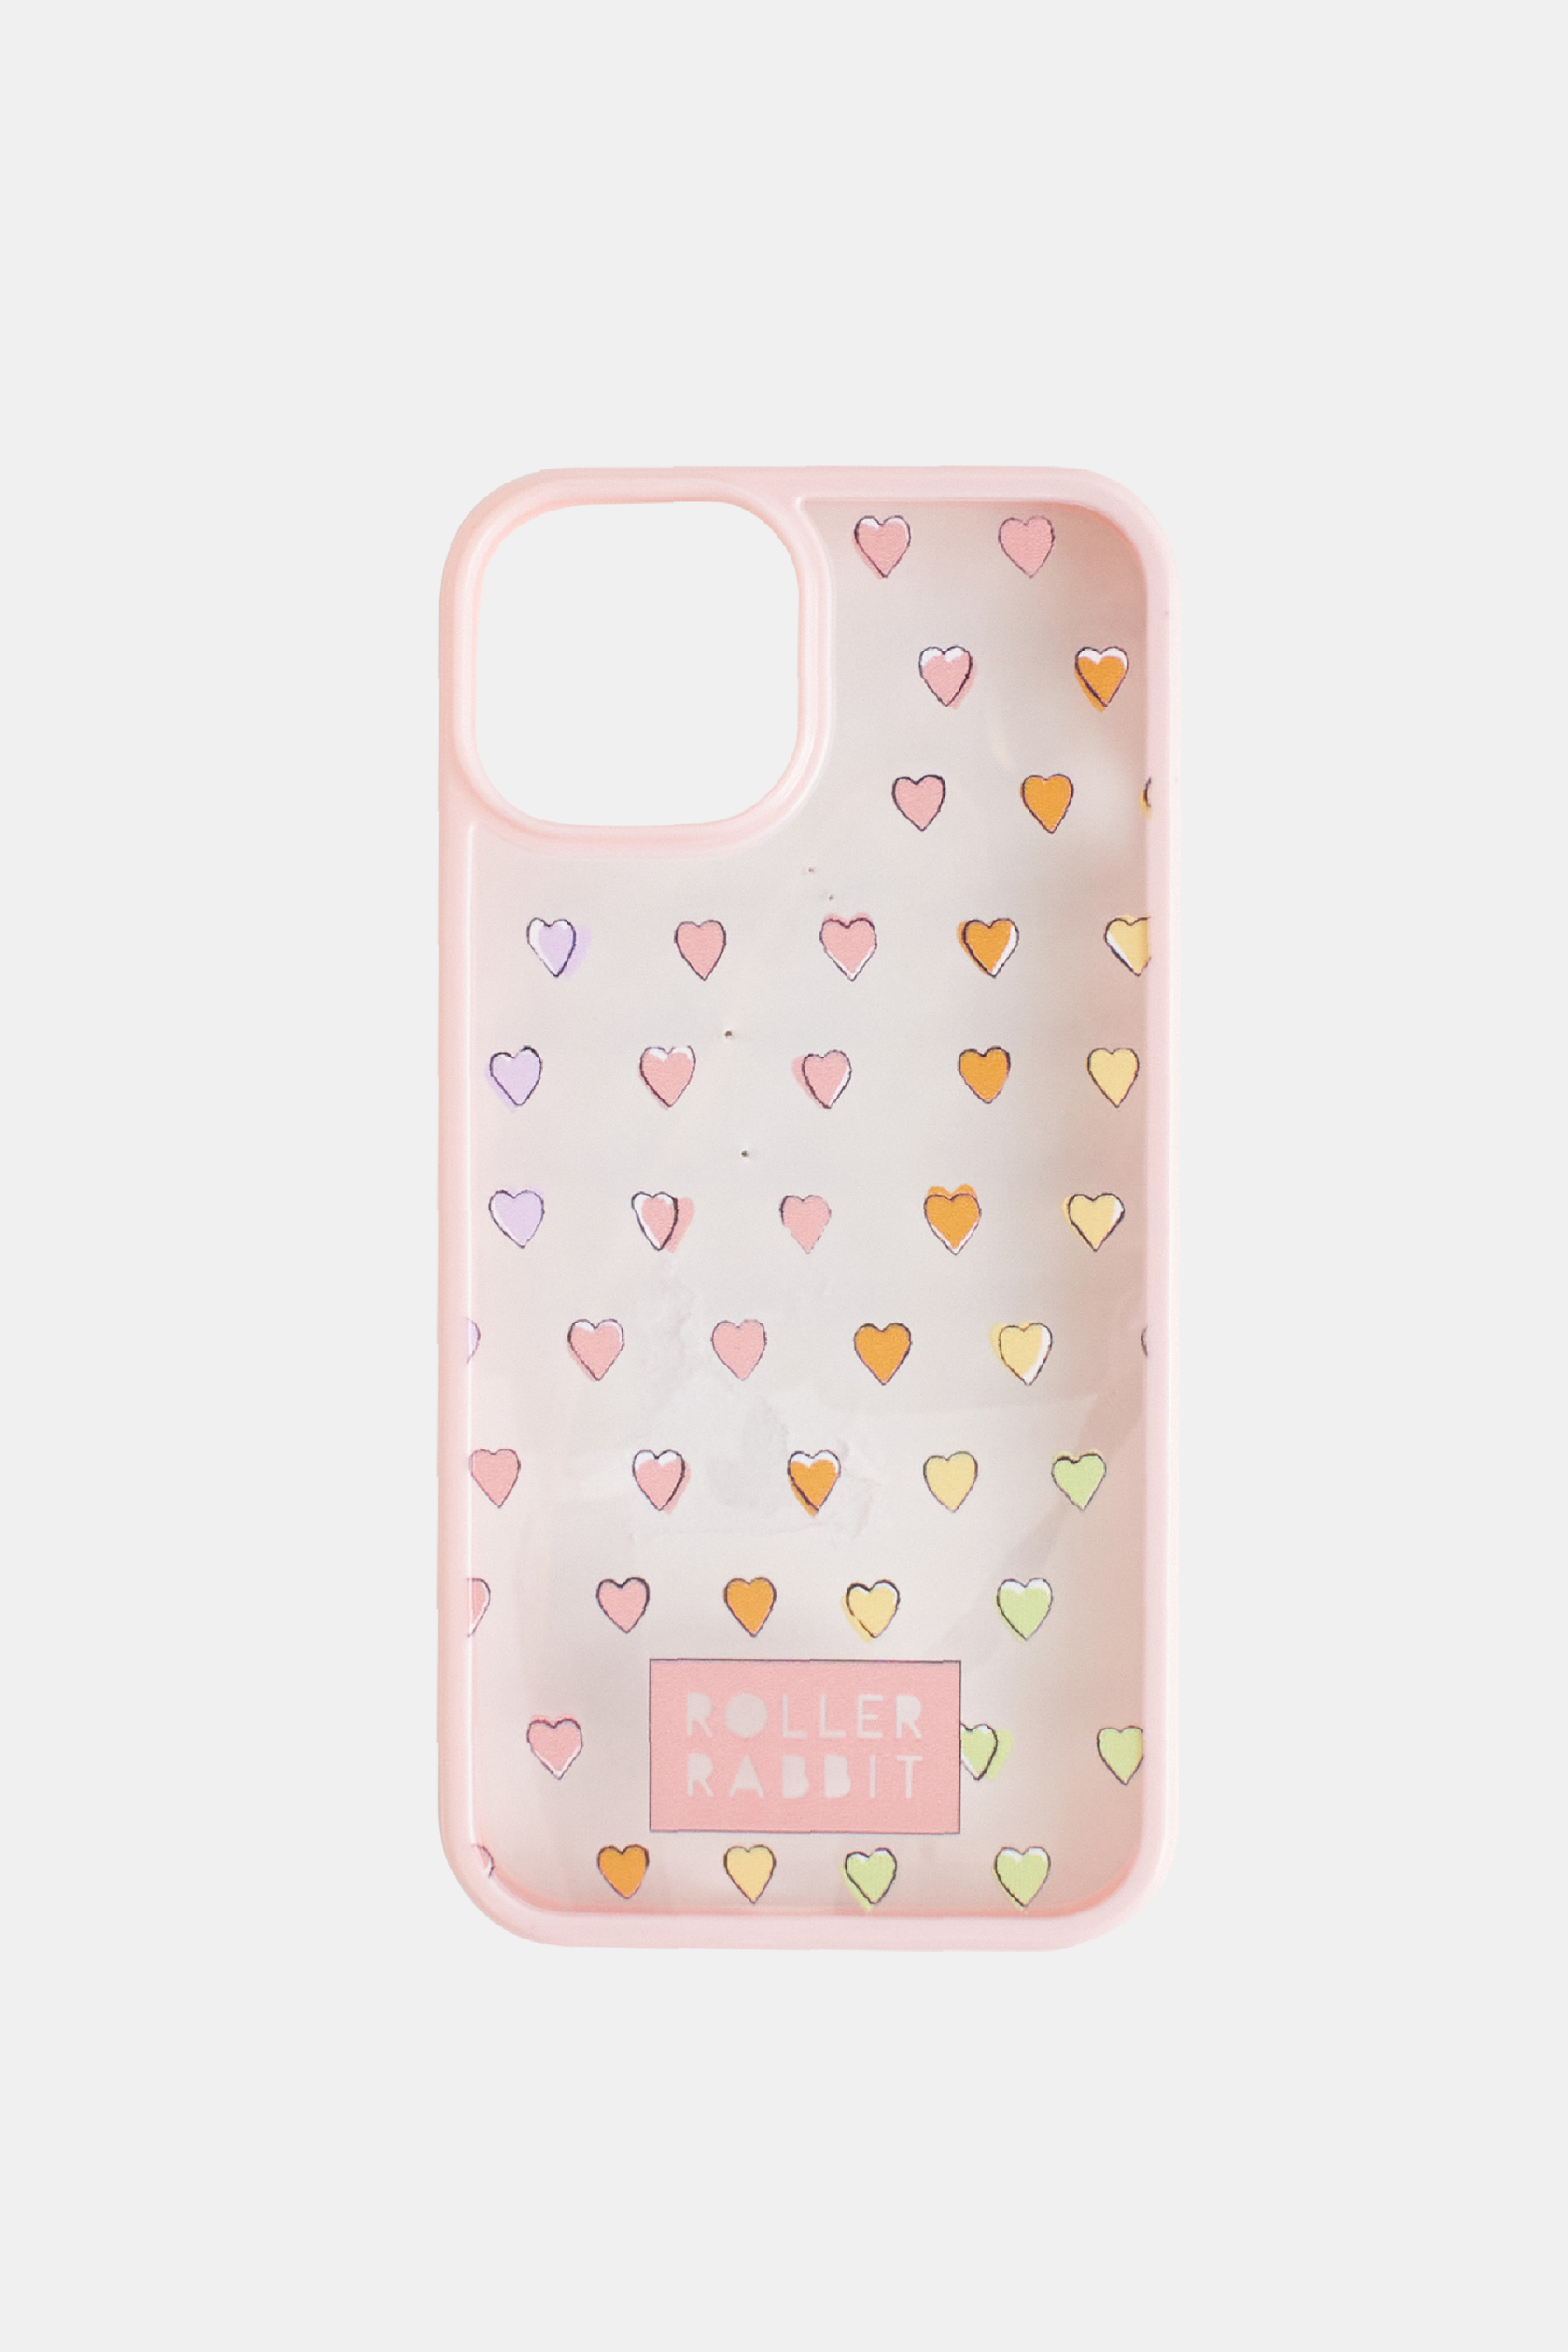 Disco Hearts iPhone Case | Roller Rabbit